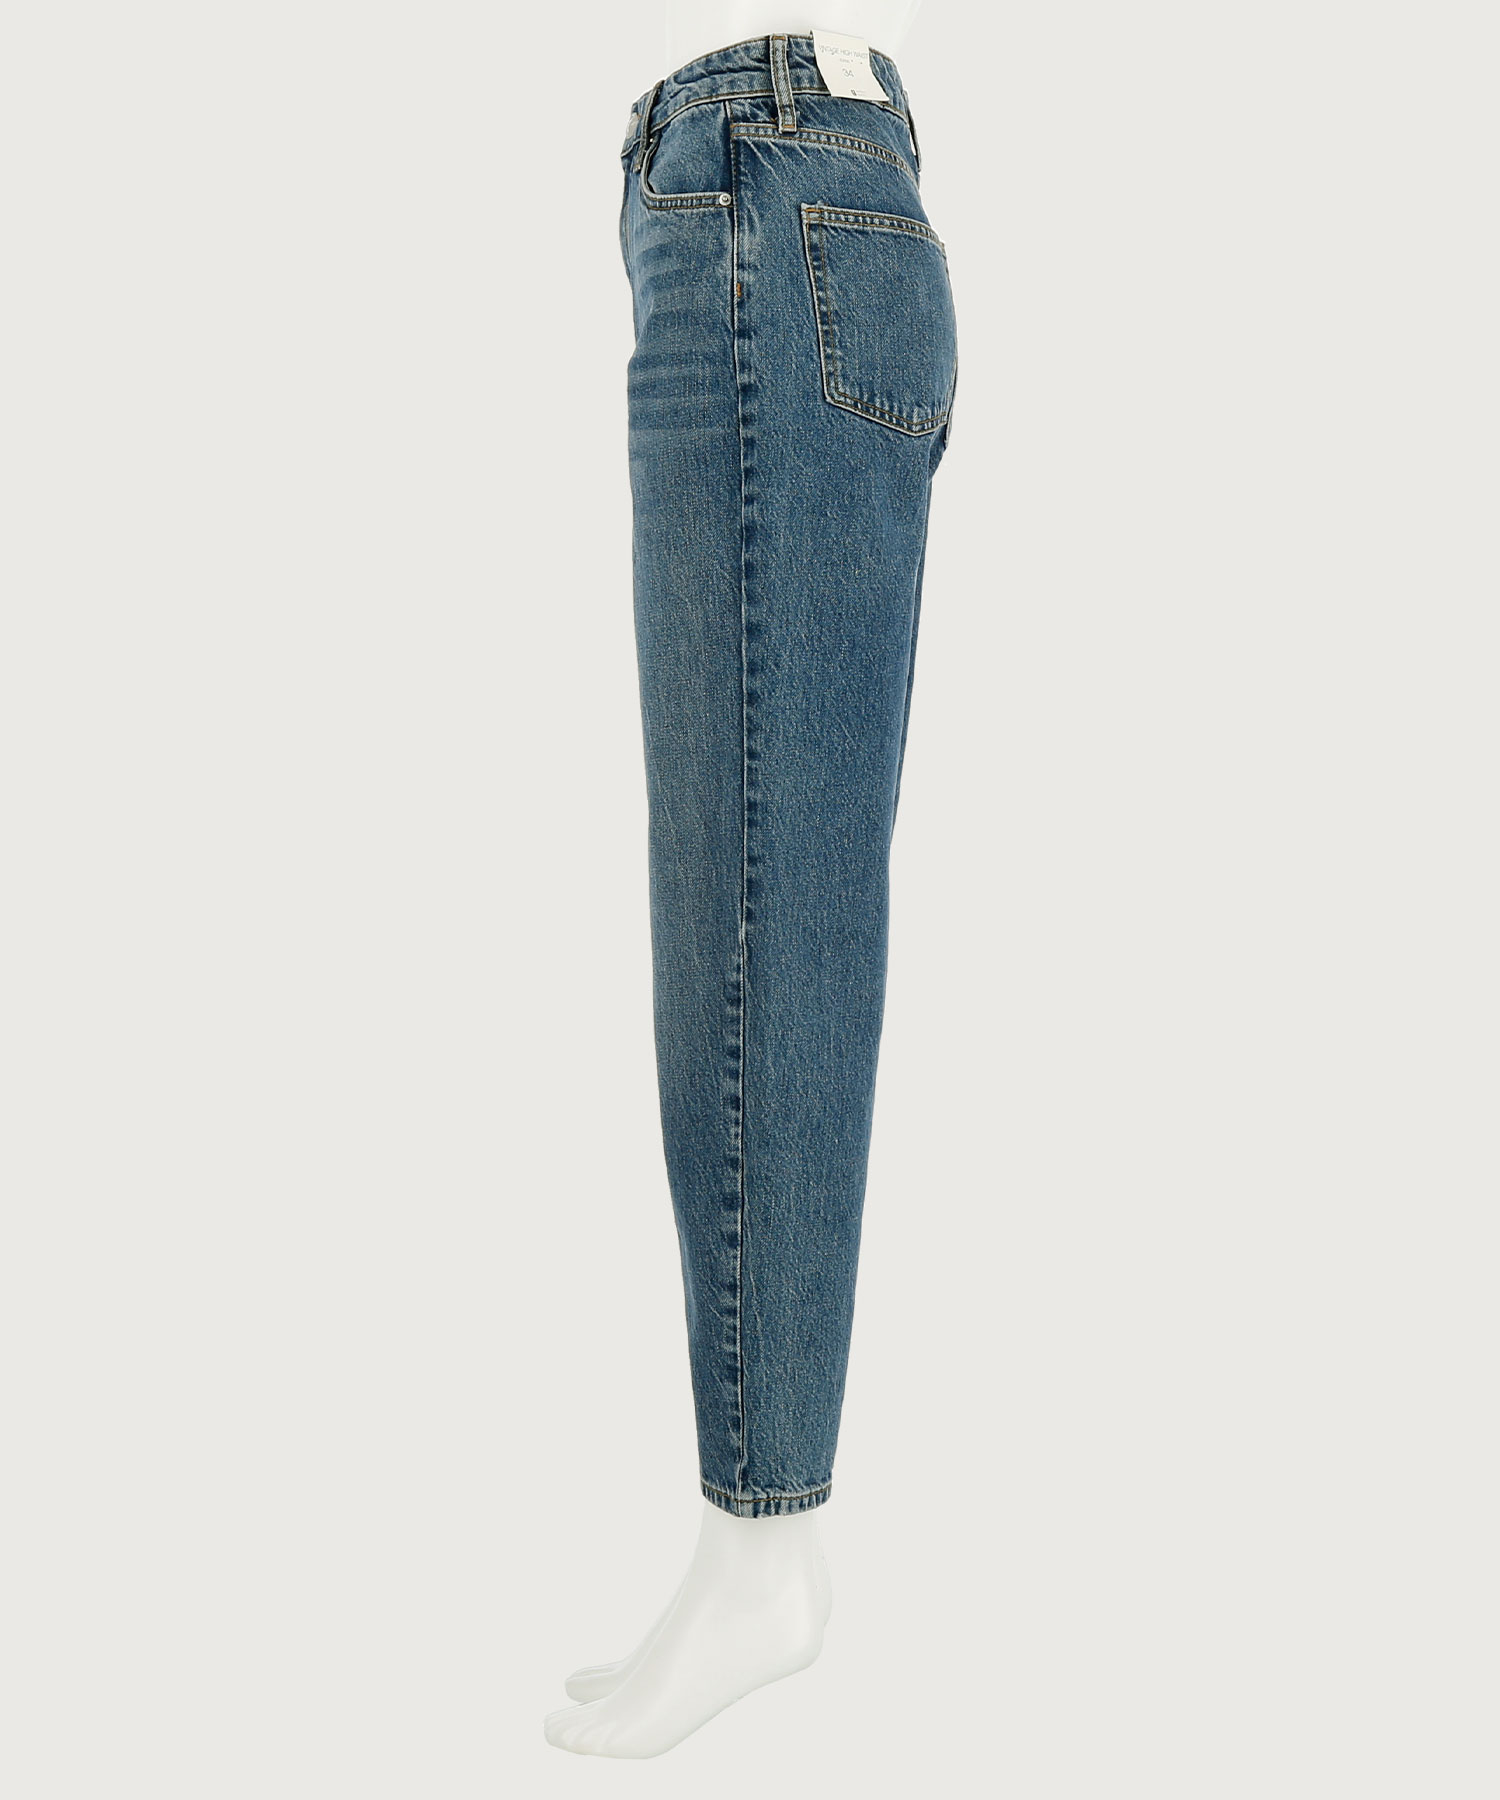 Vintage high waist jeans